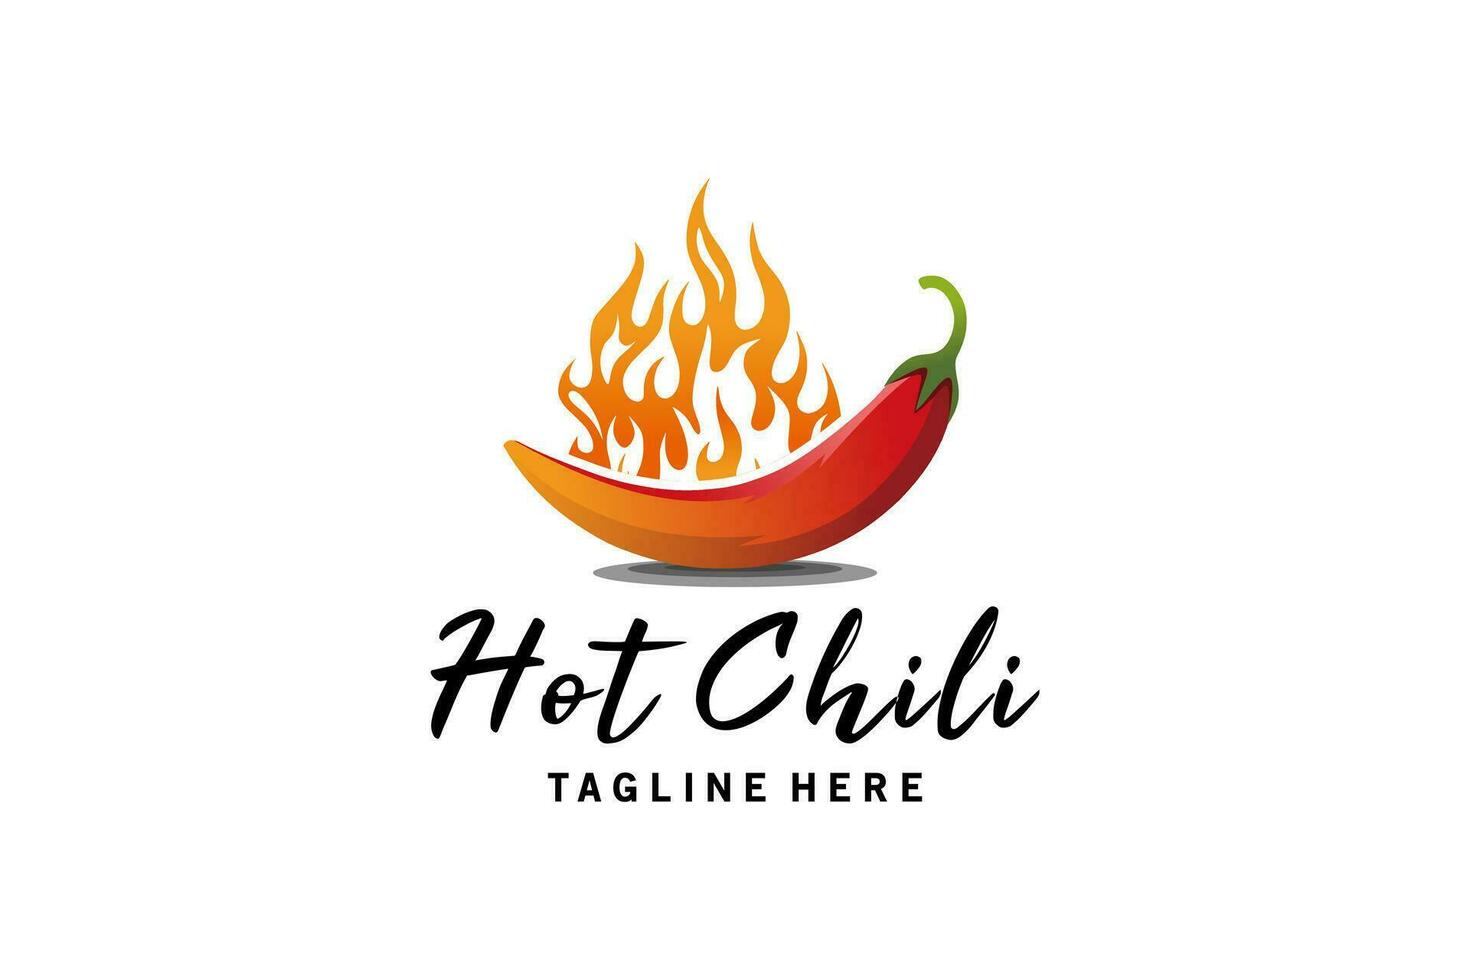 Spicy fire chili logo design with creative concept vector